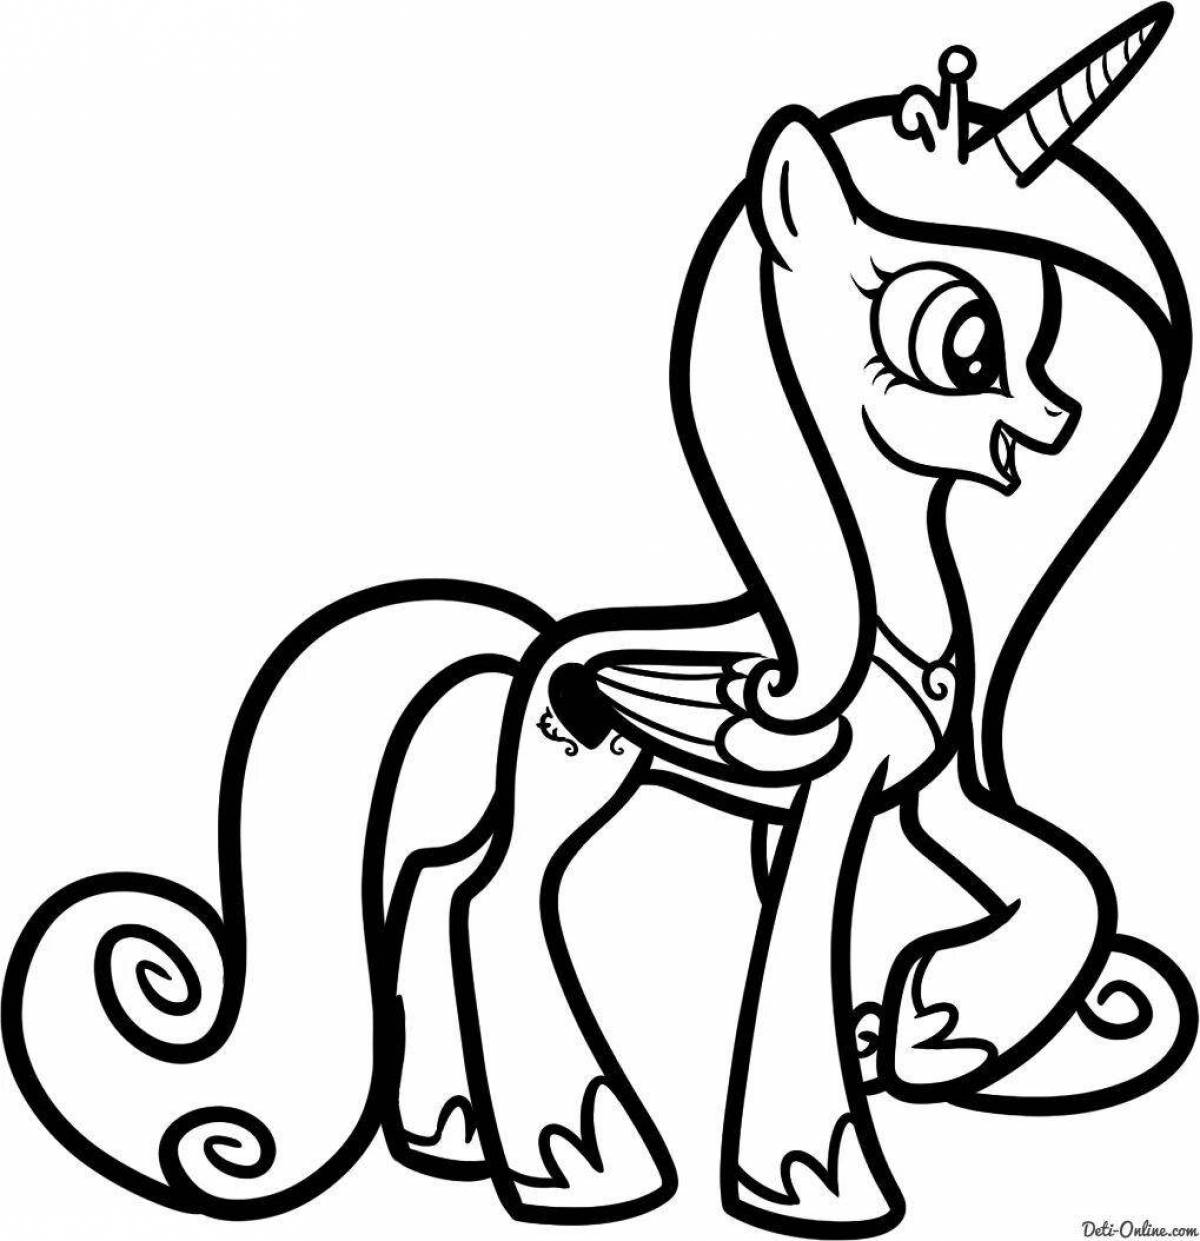 Princess cadence pony glitter coloring